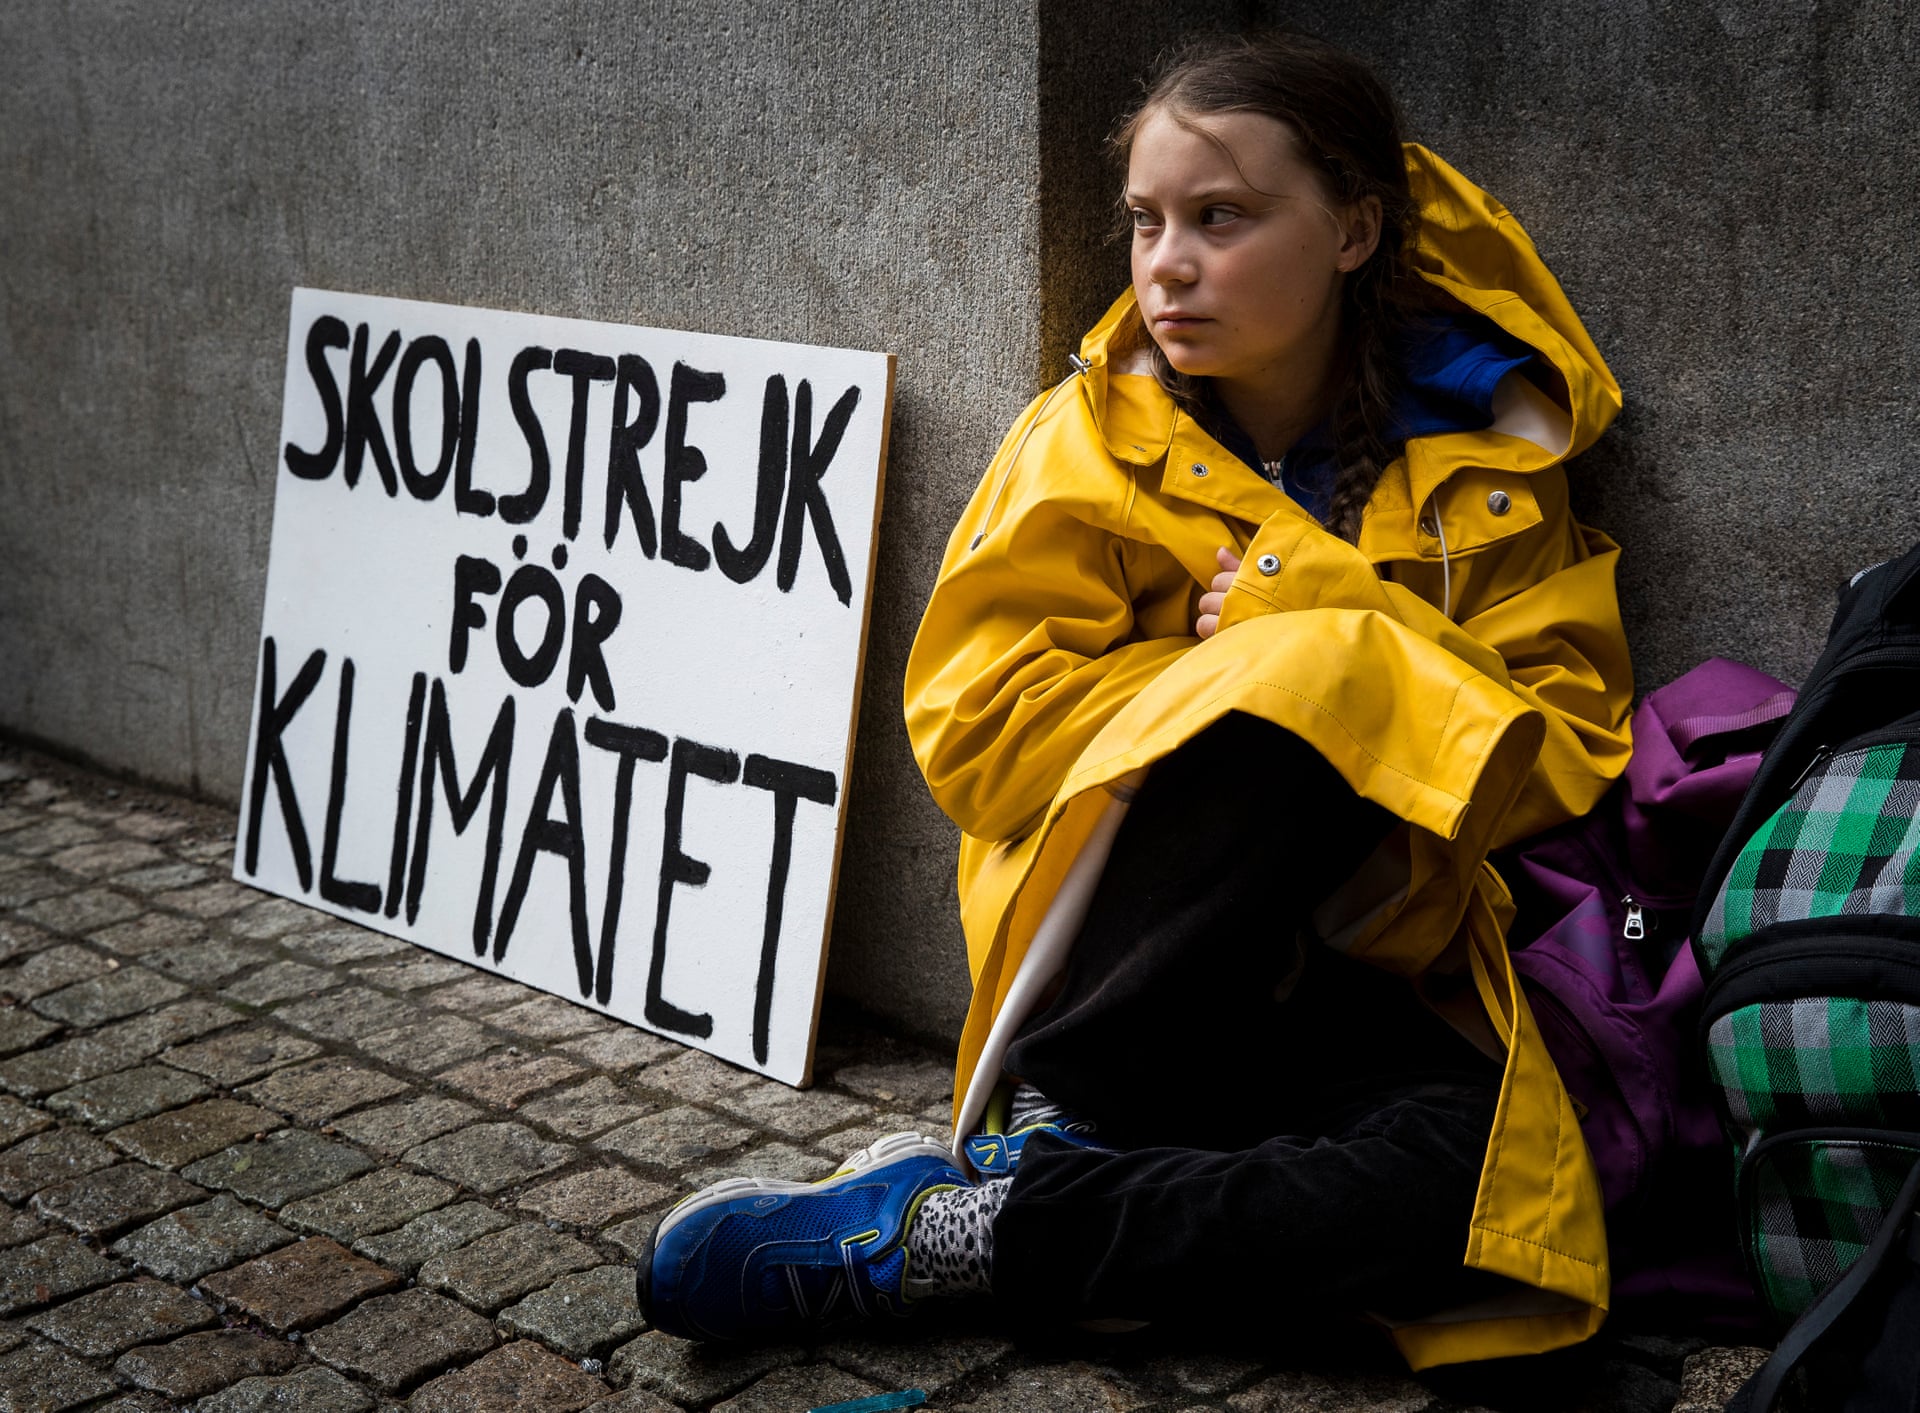 The beginning of great change: Greta Thunberg hails school climate strikes